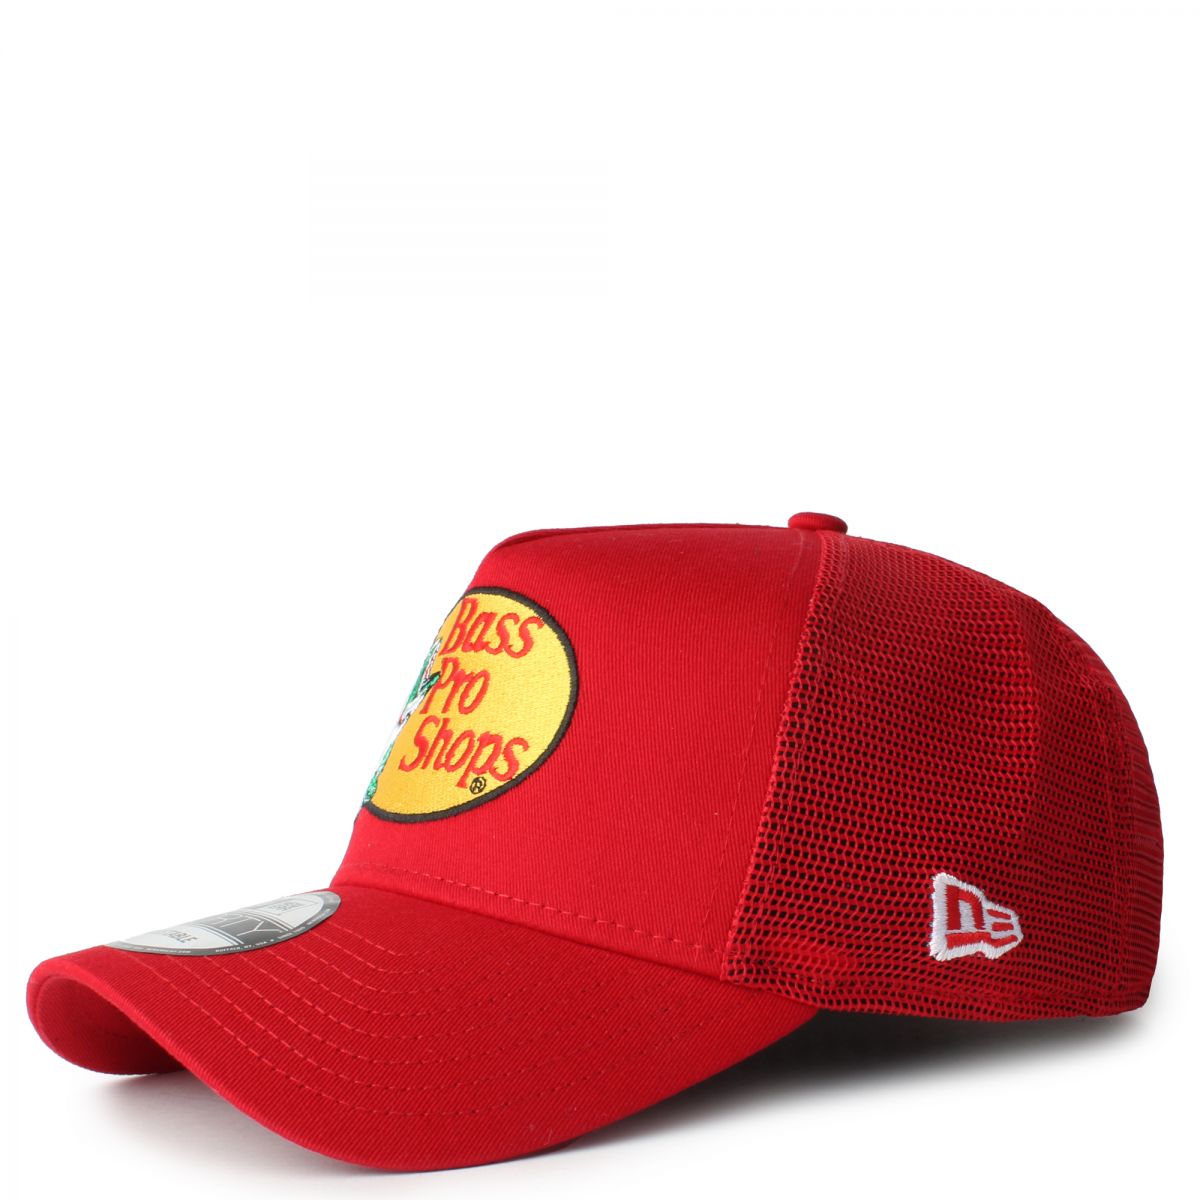 Bass Pro Shop Custom Paisley Brim Trucker Hat